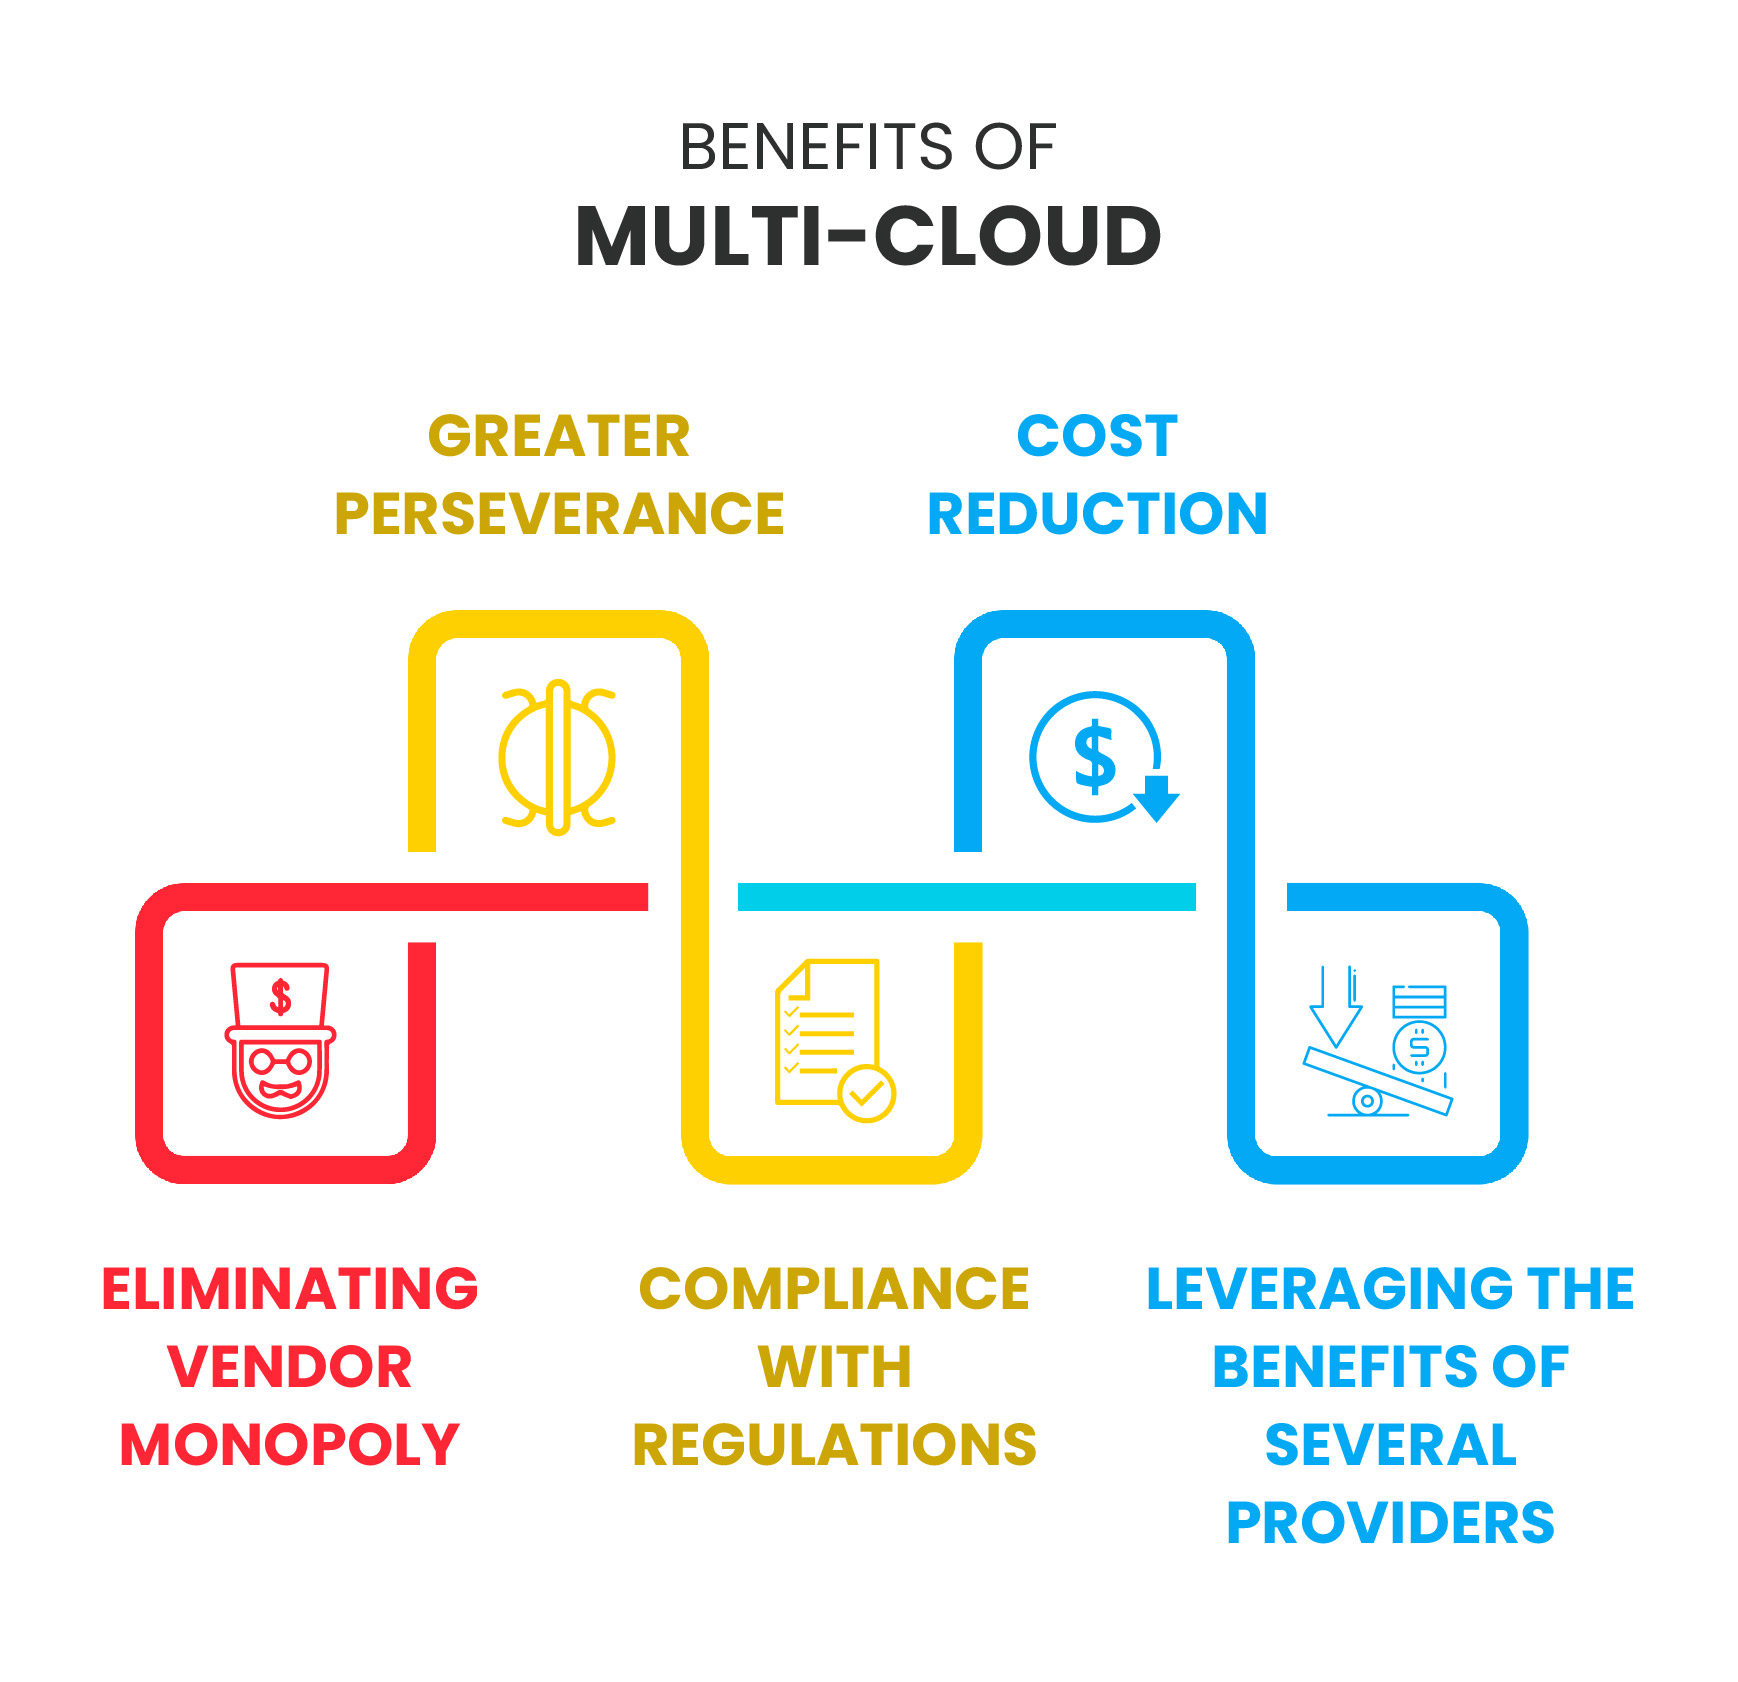 Benefits of multi-cloud